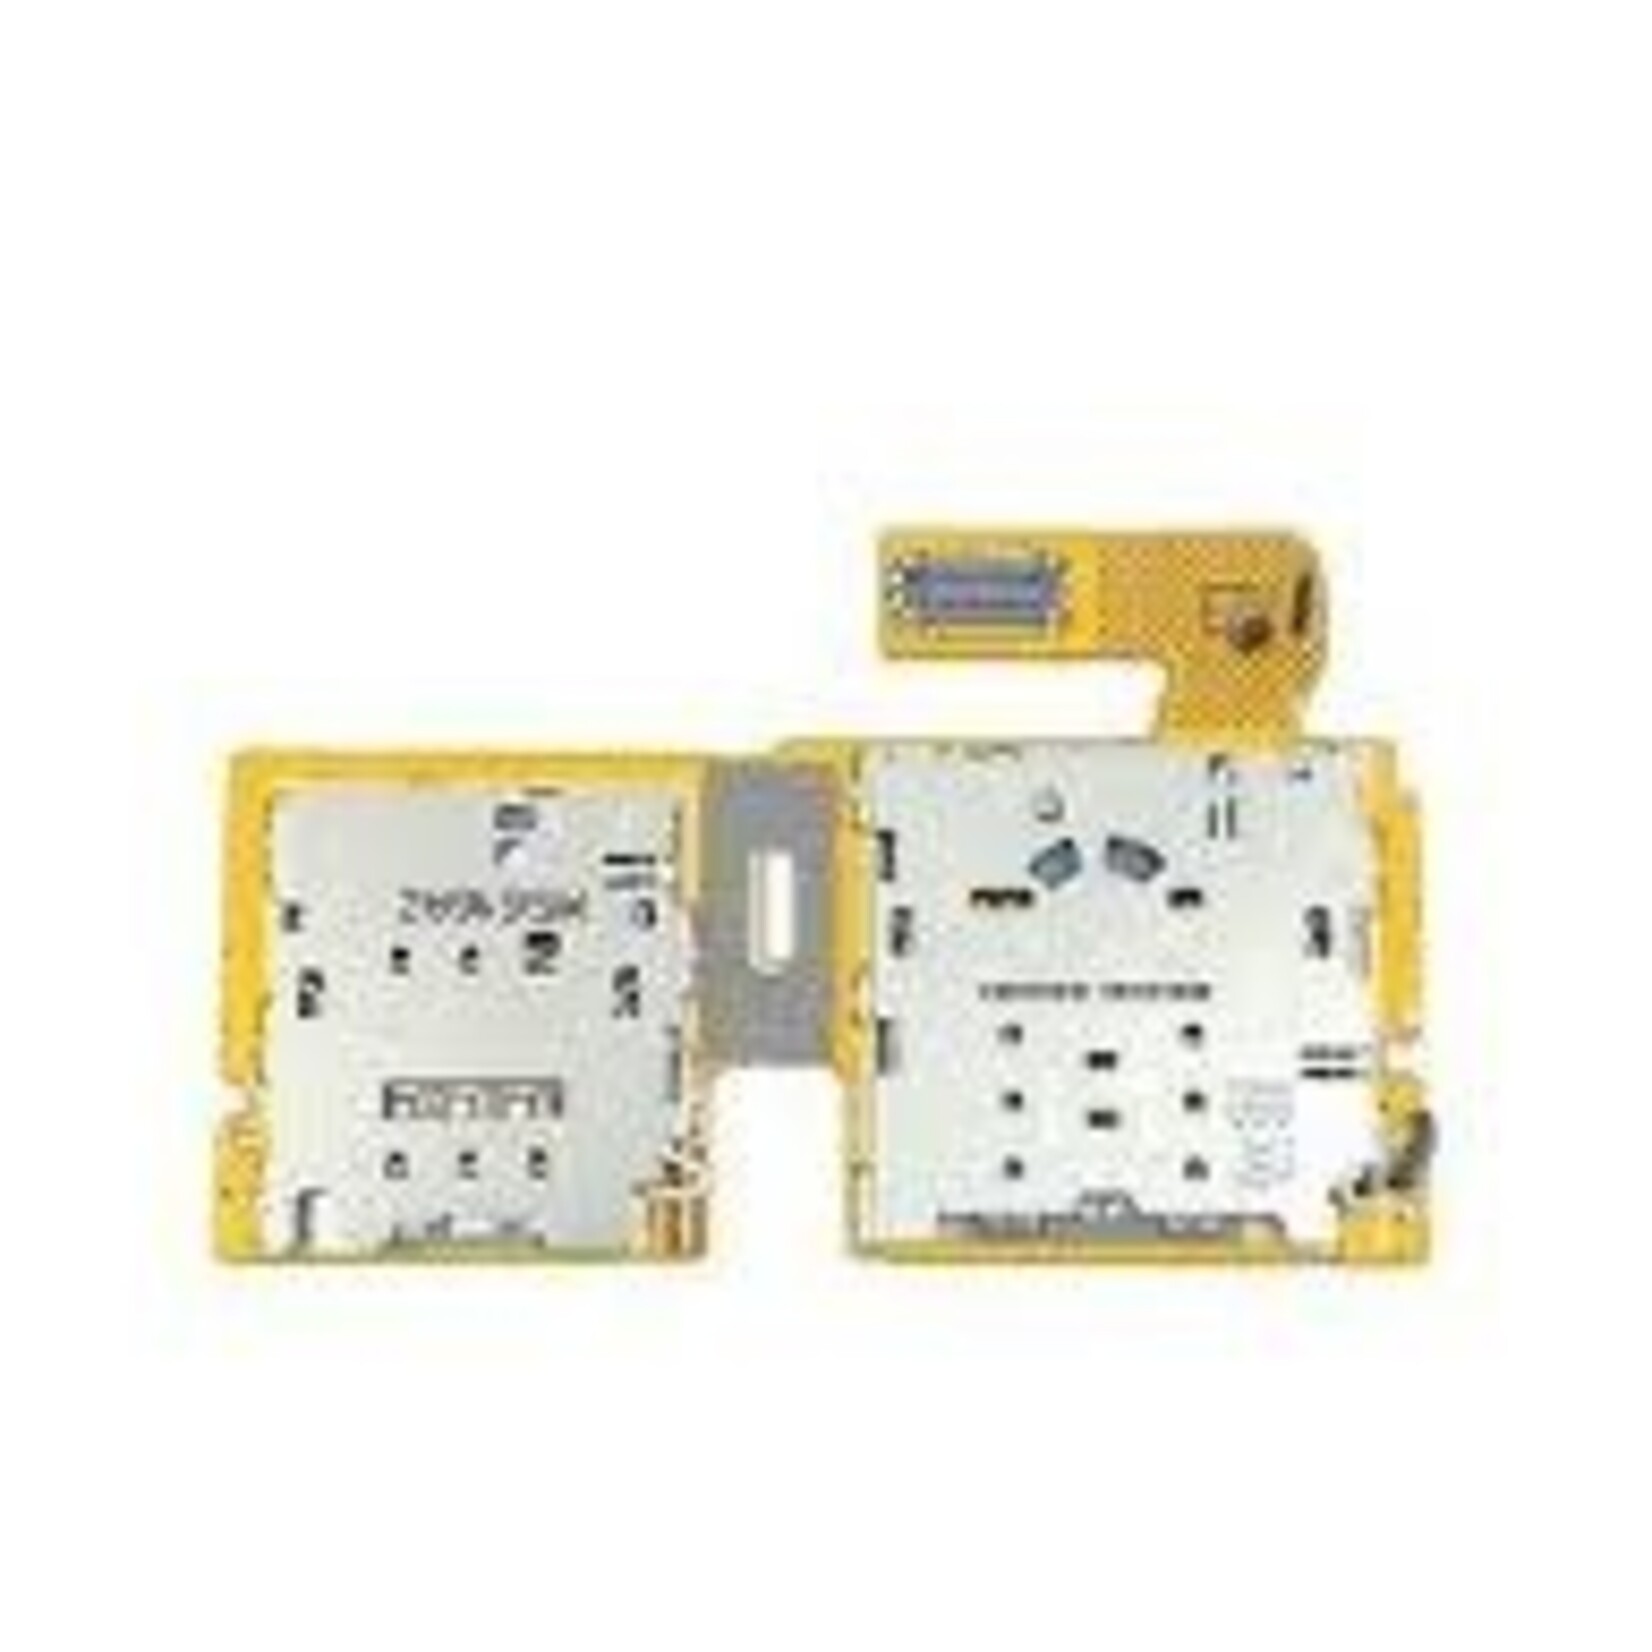 Samsung SD CARD READER FOR SAMSUNG TAB S2 9.7" SM-T810 T815